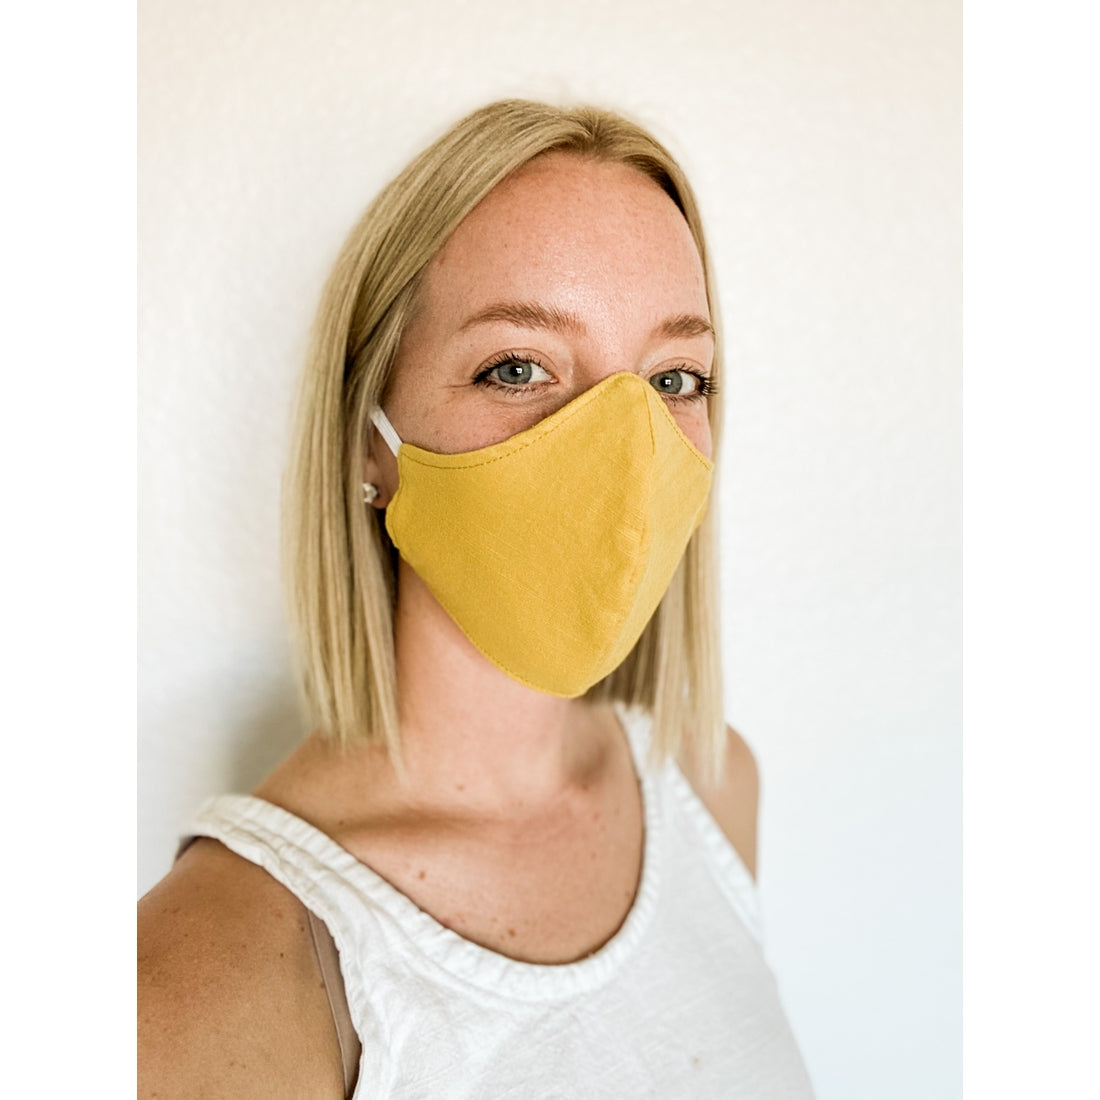 Hemp Woman's Face Masks in Saffron Yellow